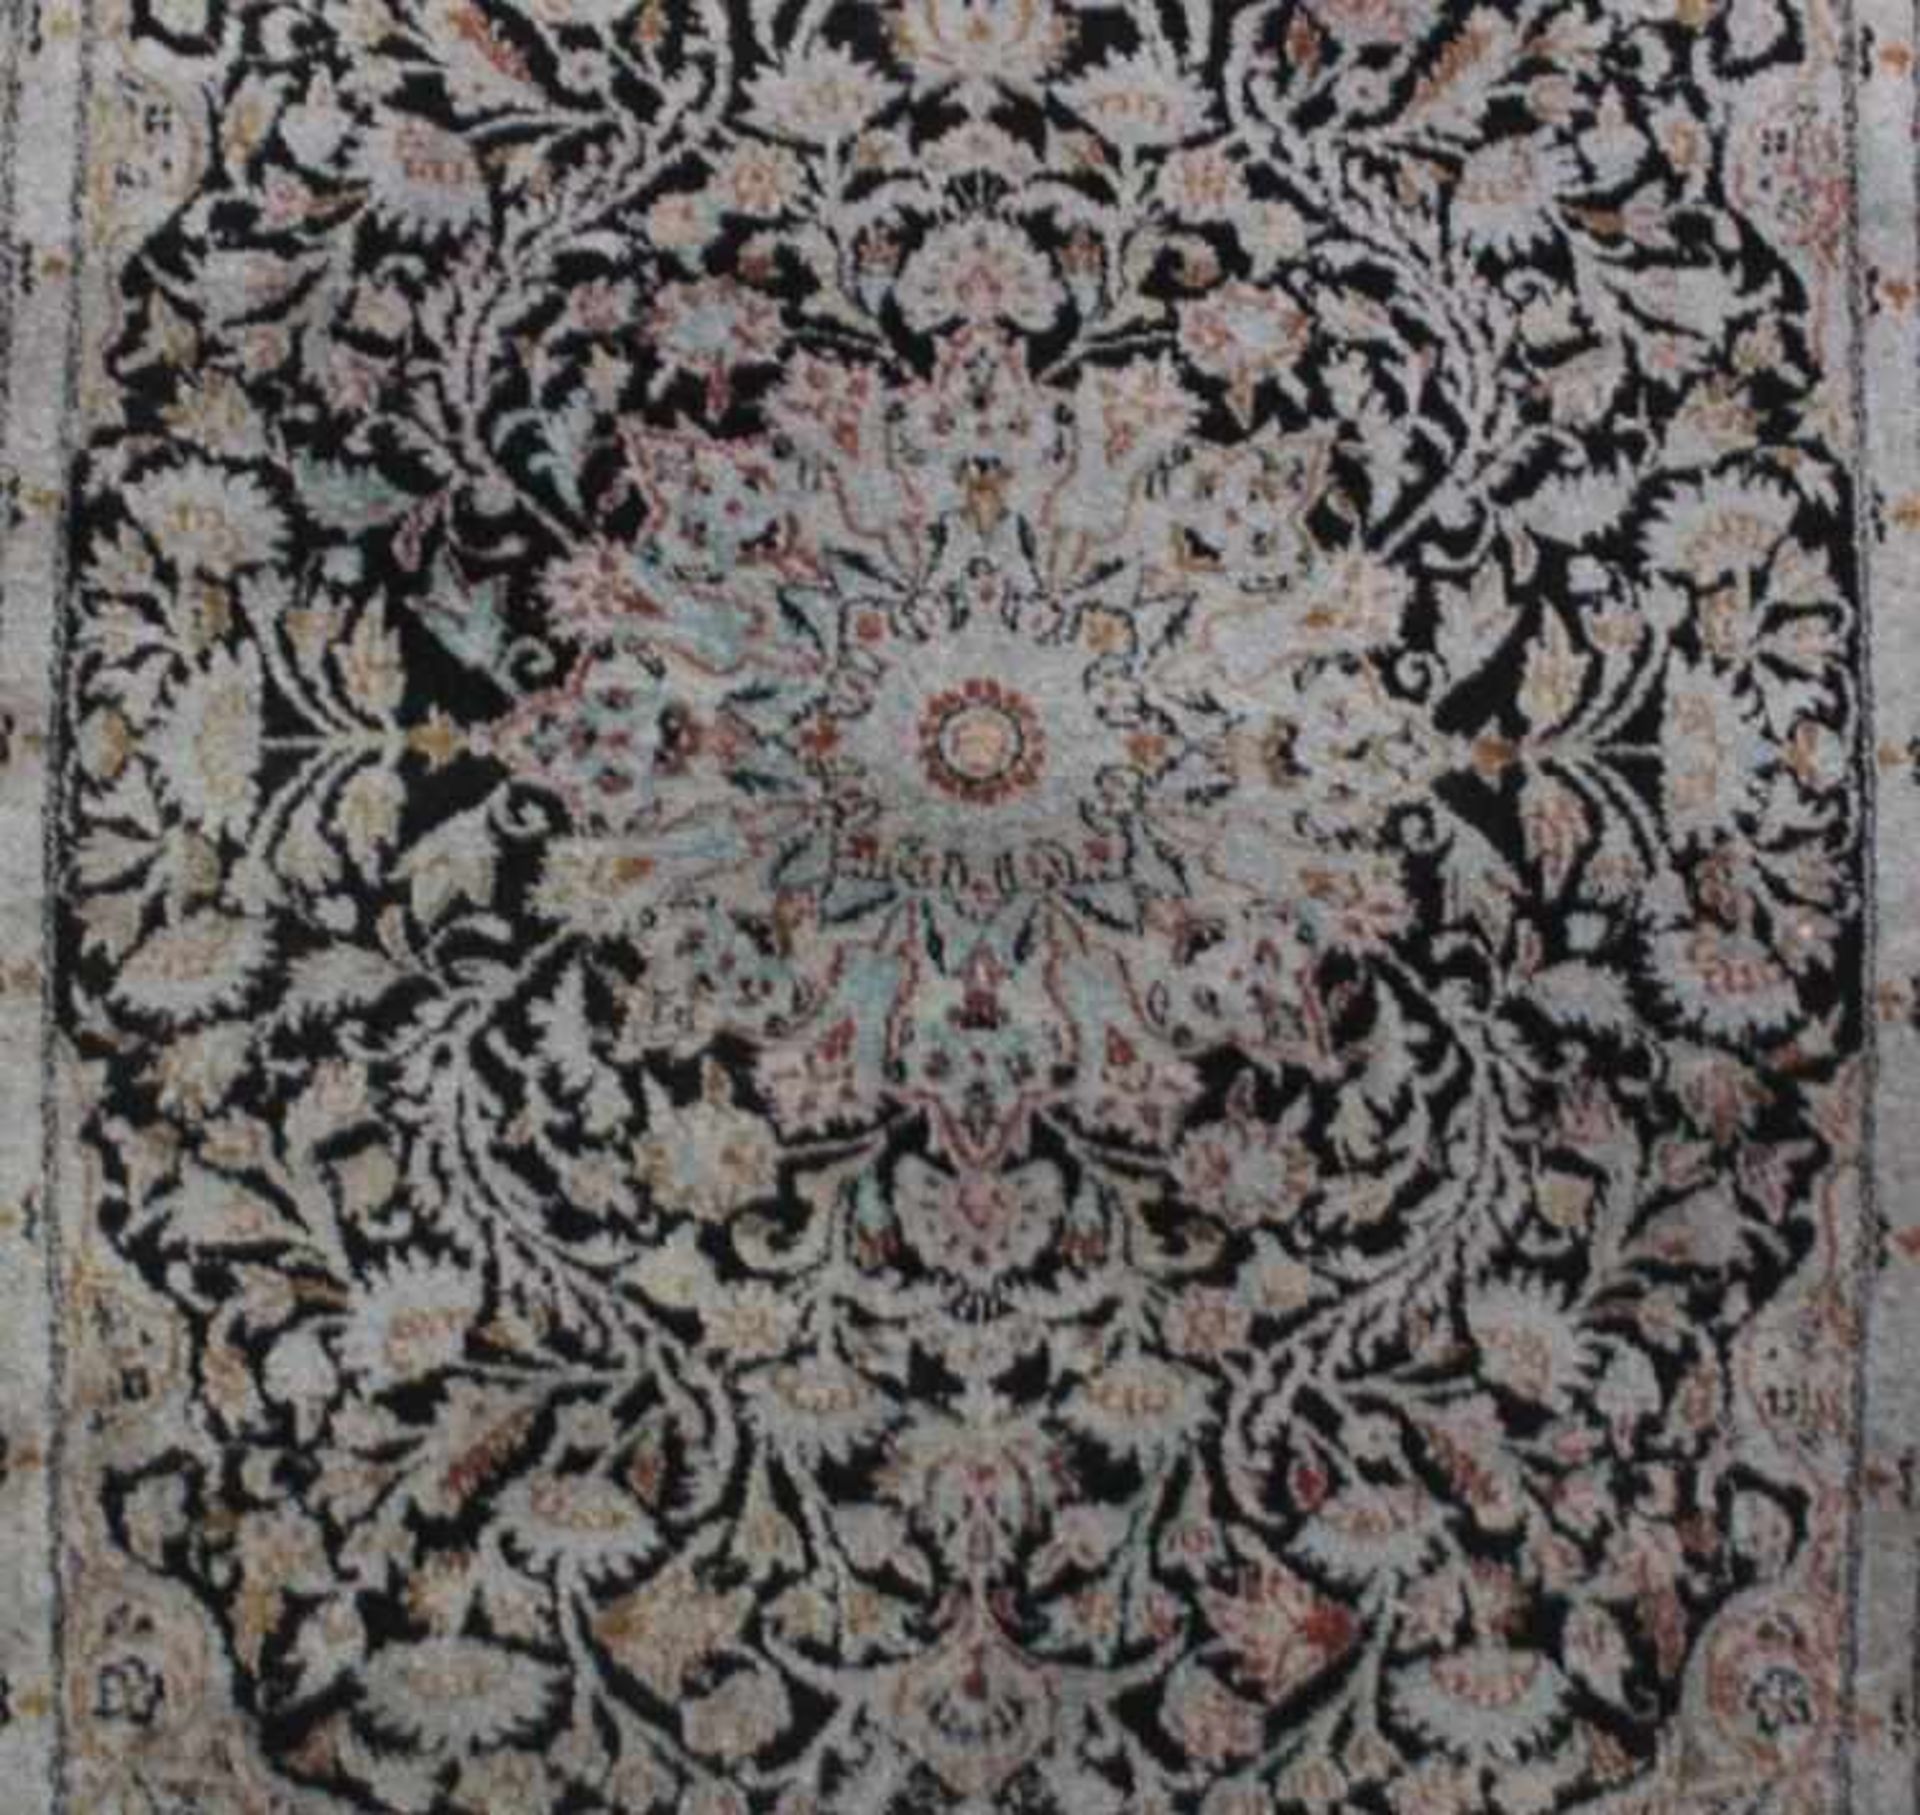 Esfahan Seidenteppich 2. Hälfte 20 Jh.Wolle mit Seide, sehr feine Knüpfung, ca. 157 x 110 cm - Image 2 of 3